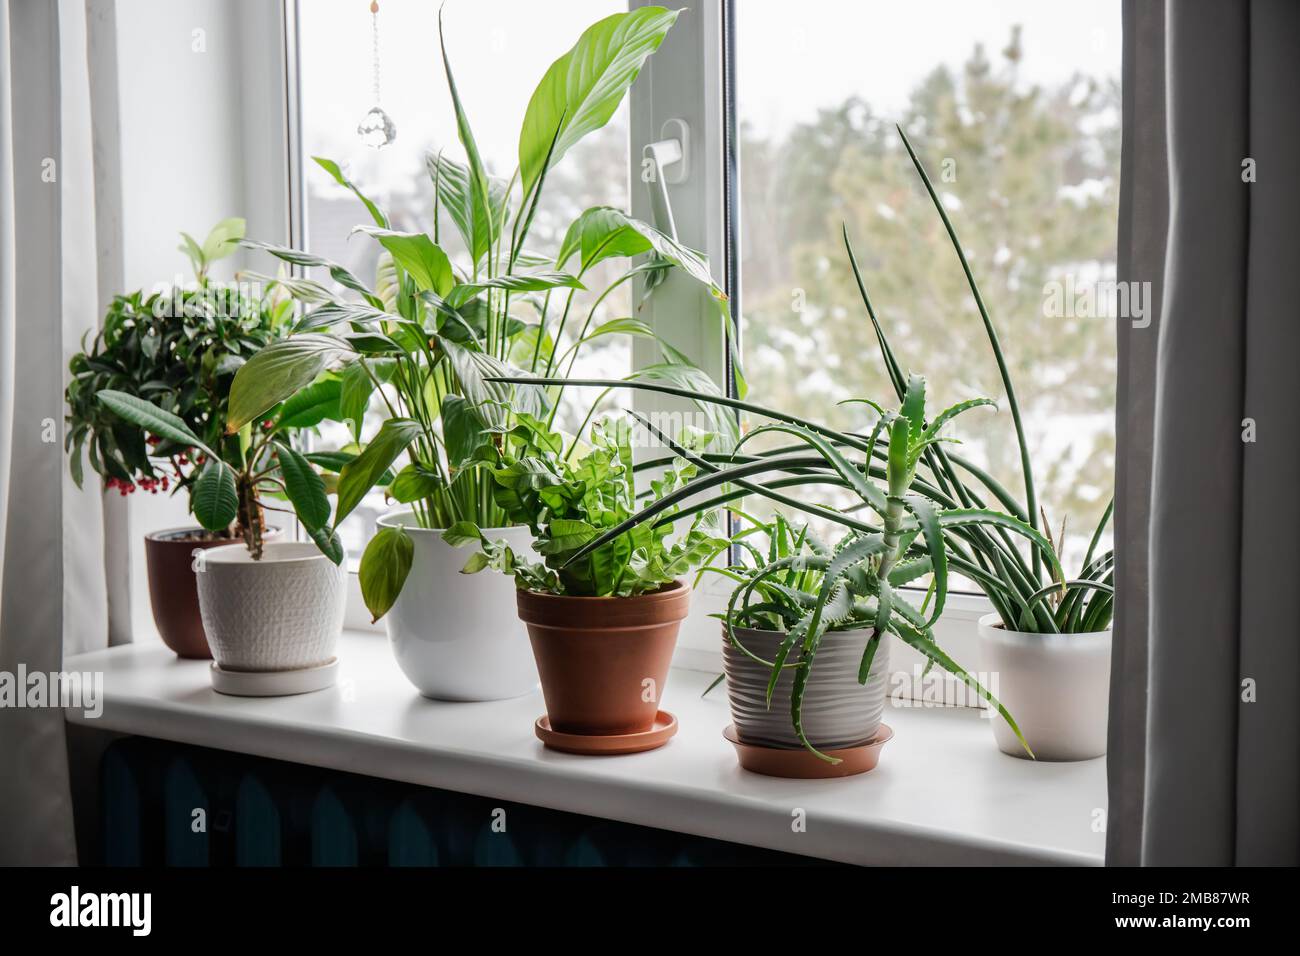 Lot of houseplants growing on window sill. From left: Ardisia crenata, Euphorbia leuconeura, Spathiphyllum, Asplenium nidus, Aloe vera... Stock Photo